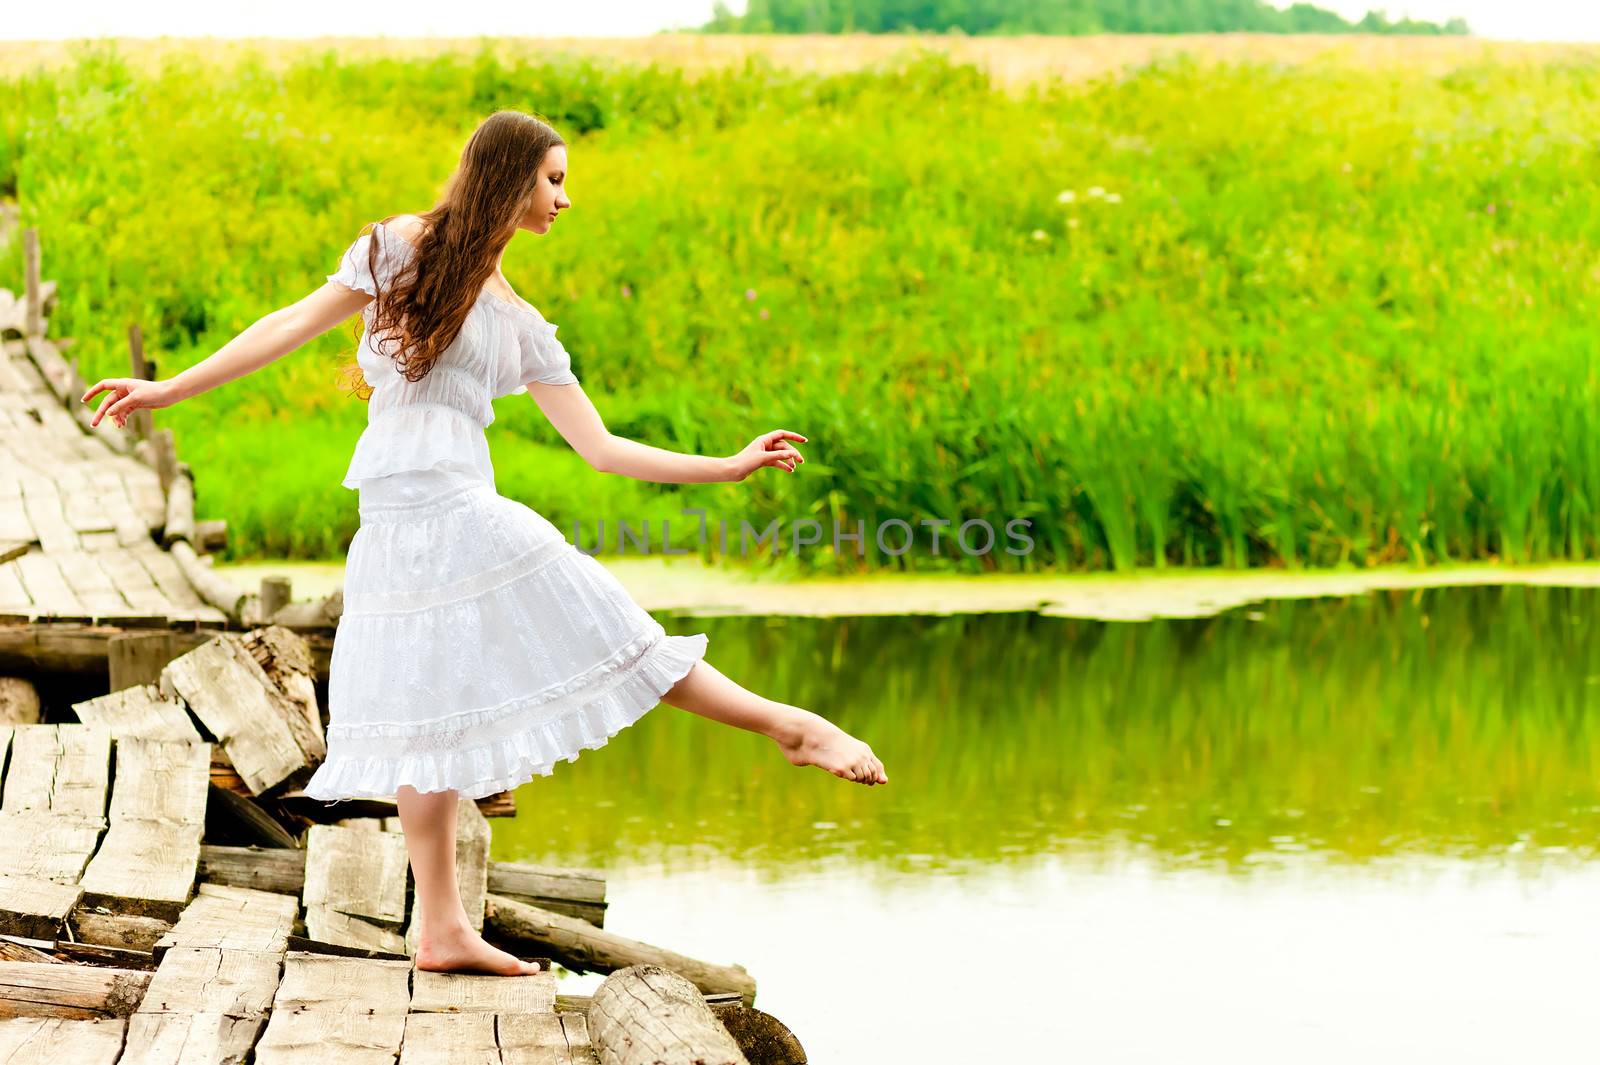 girl on the bridge balances on one leg by kosmsos111